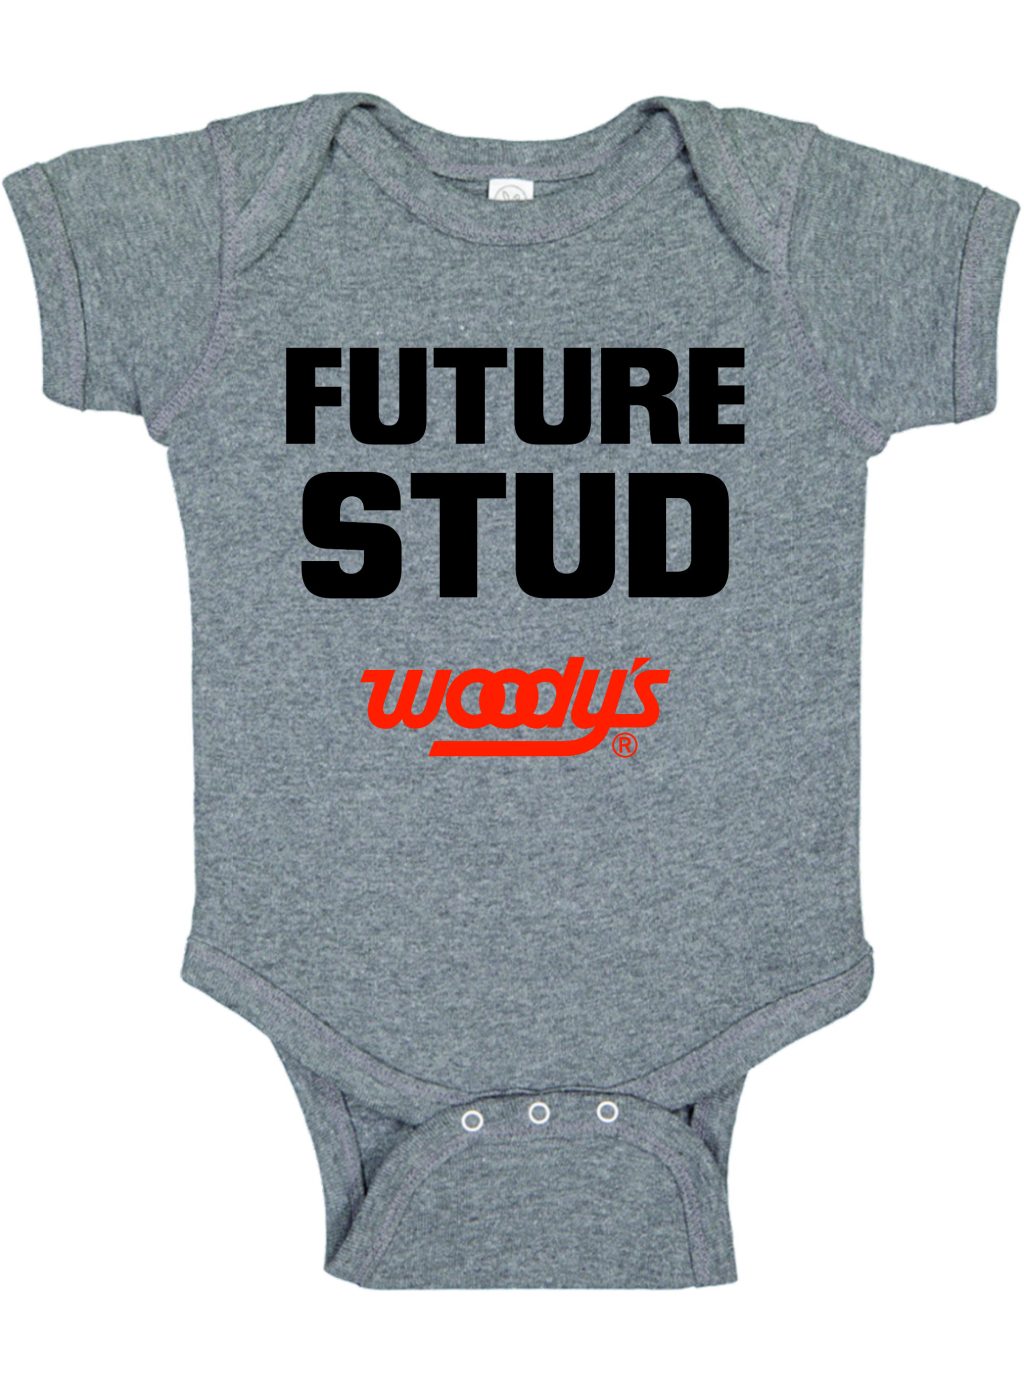 Baby Grey Future Stud Onesie | Woody's Traction